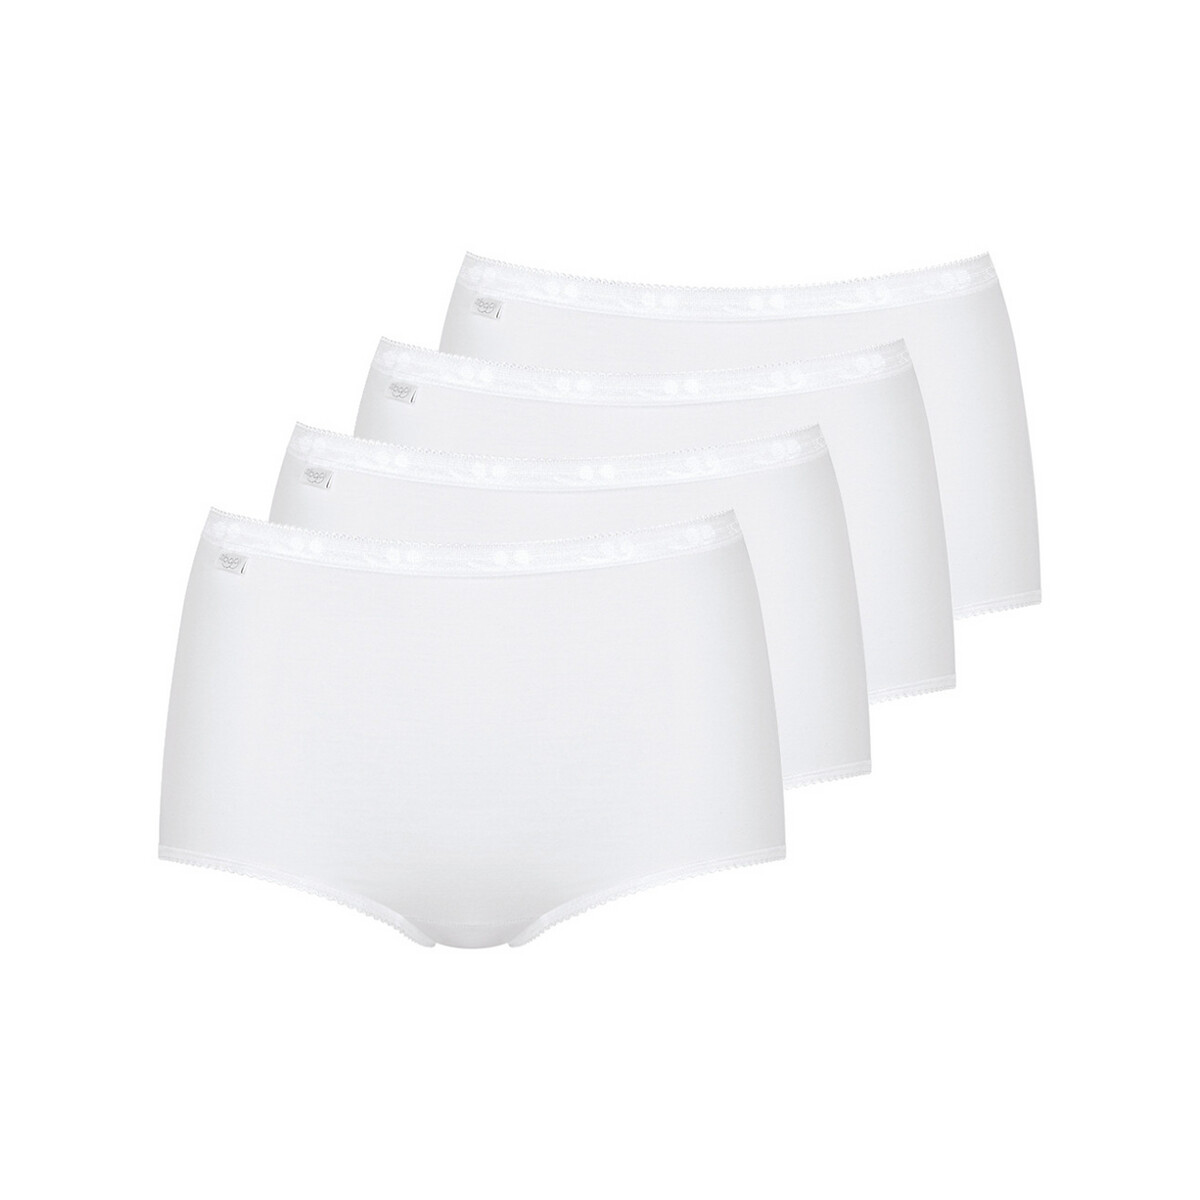 Maxi Cotton White Full Briefs 4 Pack Size 20 New No Tags Sloggi Basic